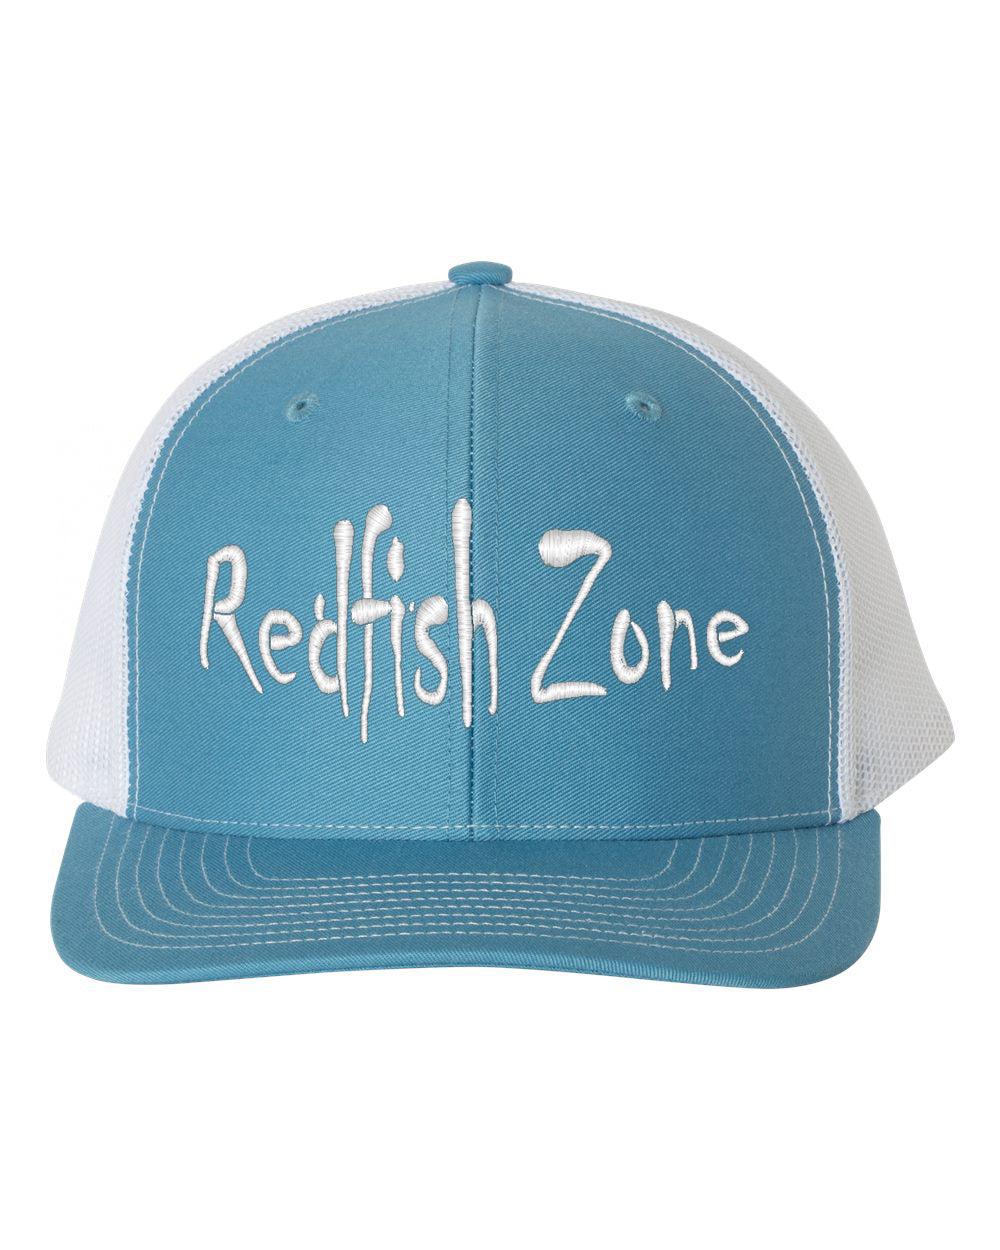 Redfish Zone, Columbia Blue/White Trucker Mesh Snapback With White Raised Lettering